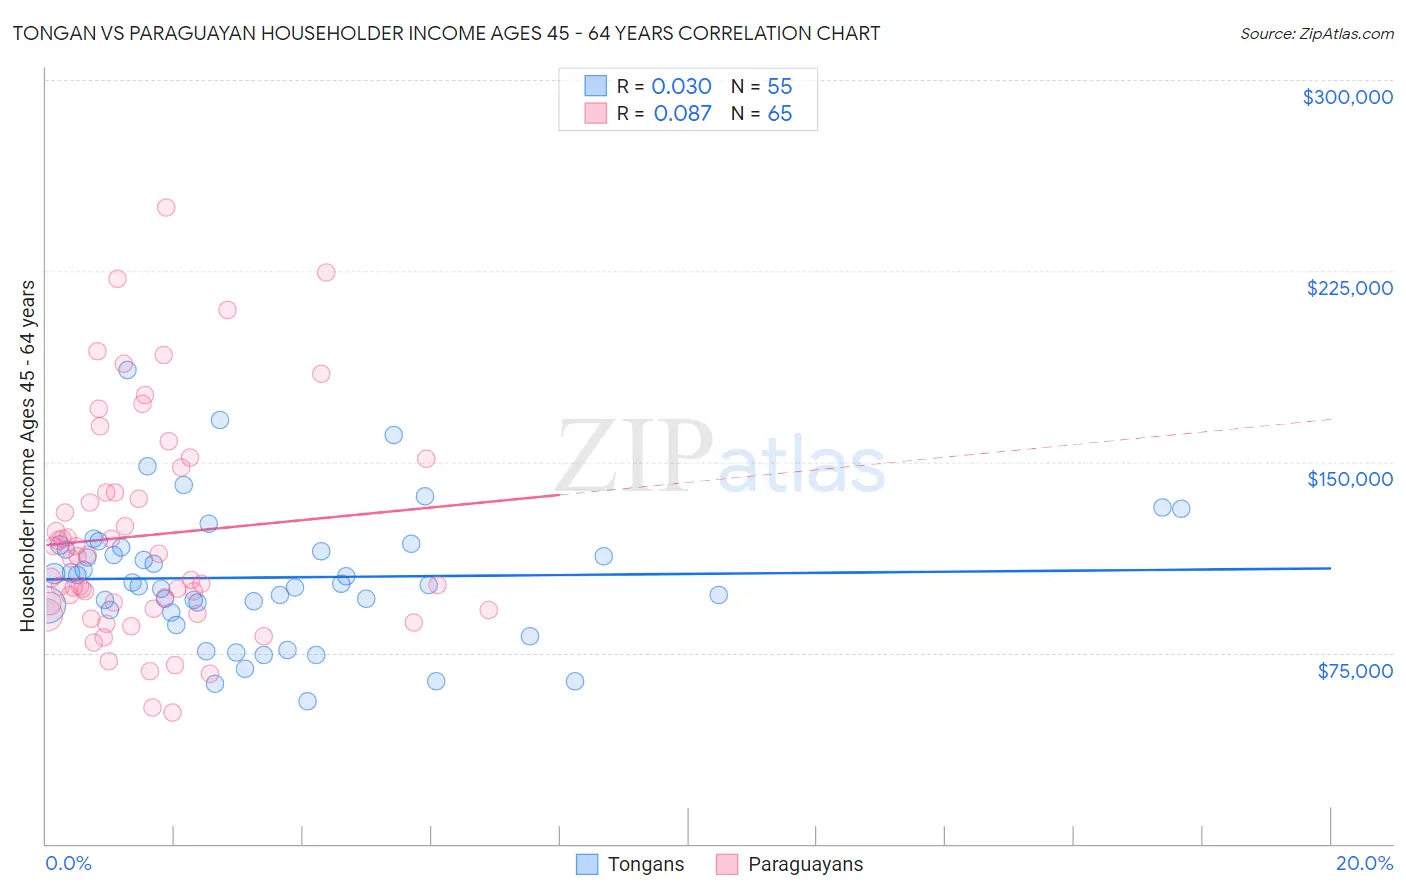 Tongan vs Paraguayan Householder Income Ages 45 - 64 years